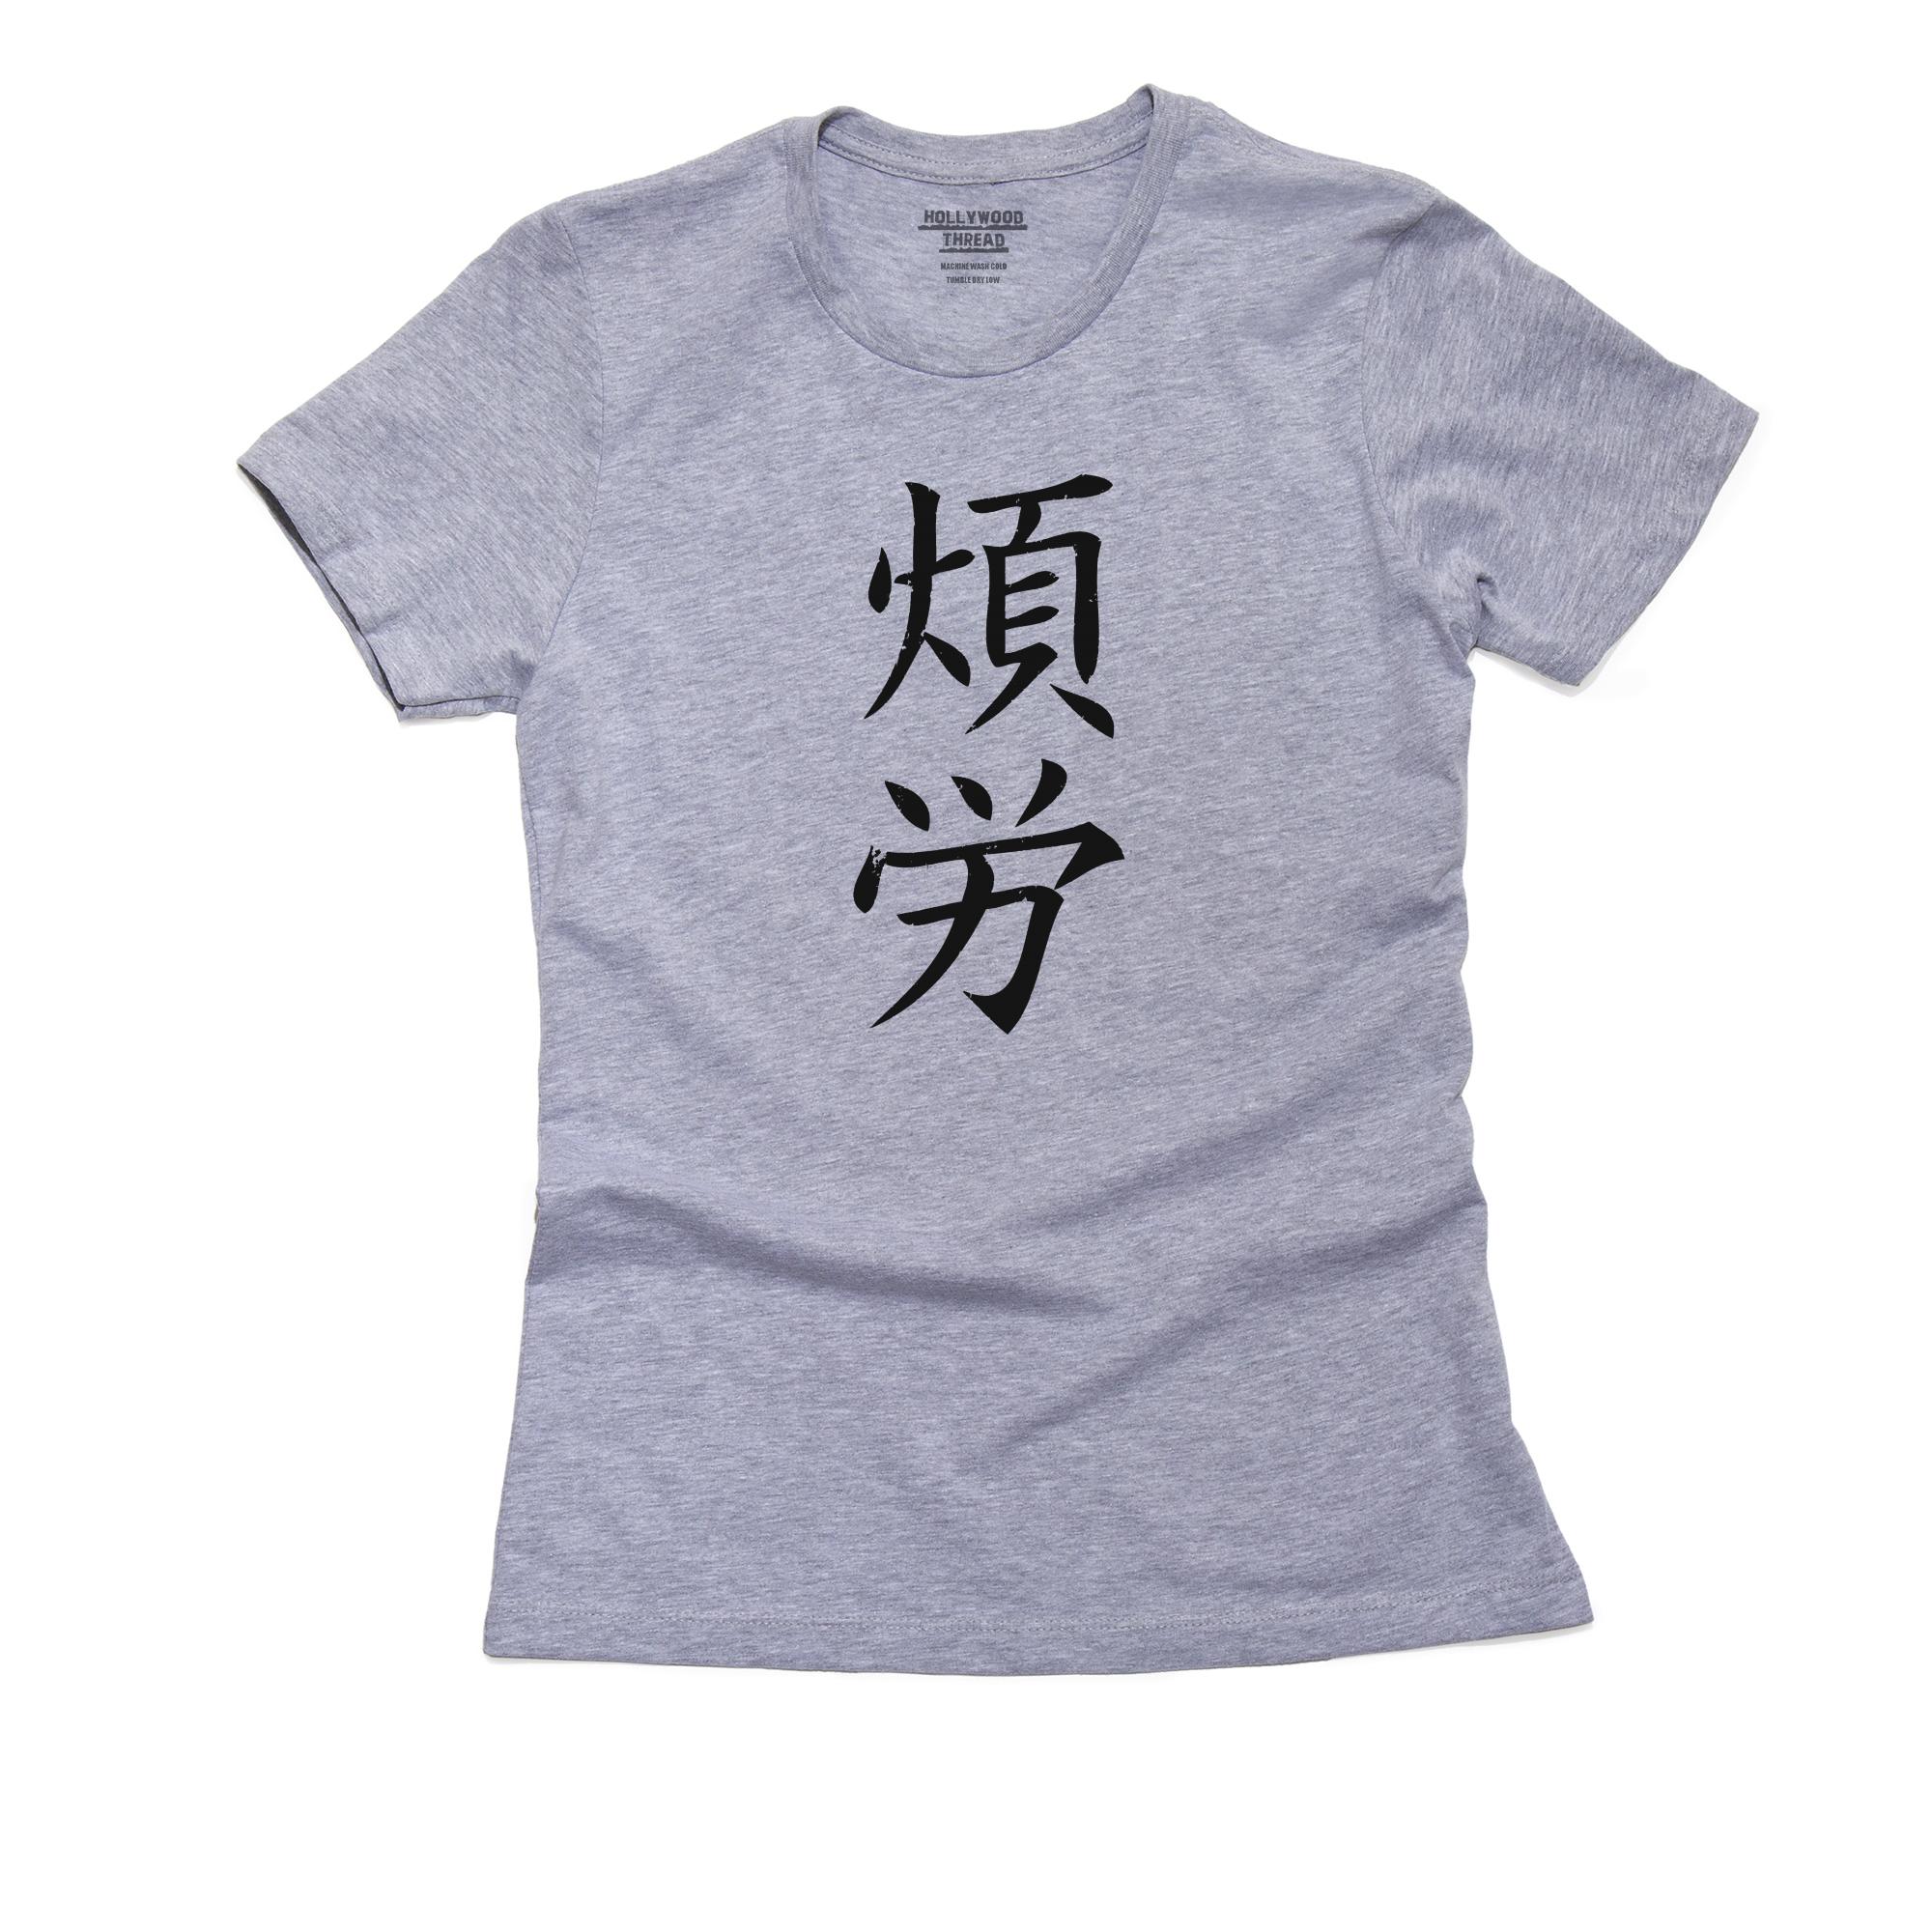 Pain - Chinese / Japanese Asian Kanji Characters Women's Cotton Grey T-Shirt - image 1 of 2